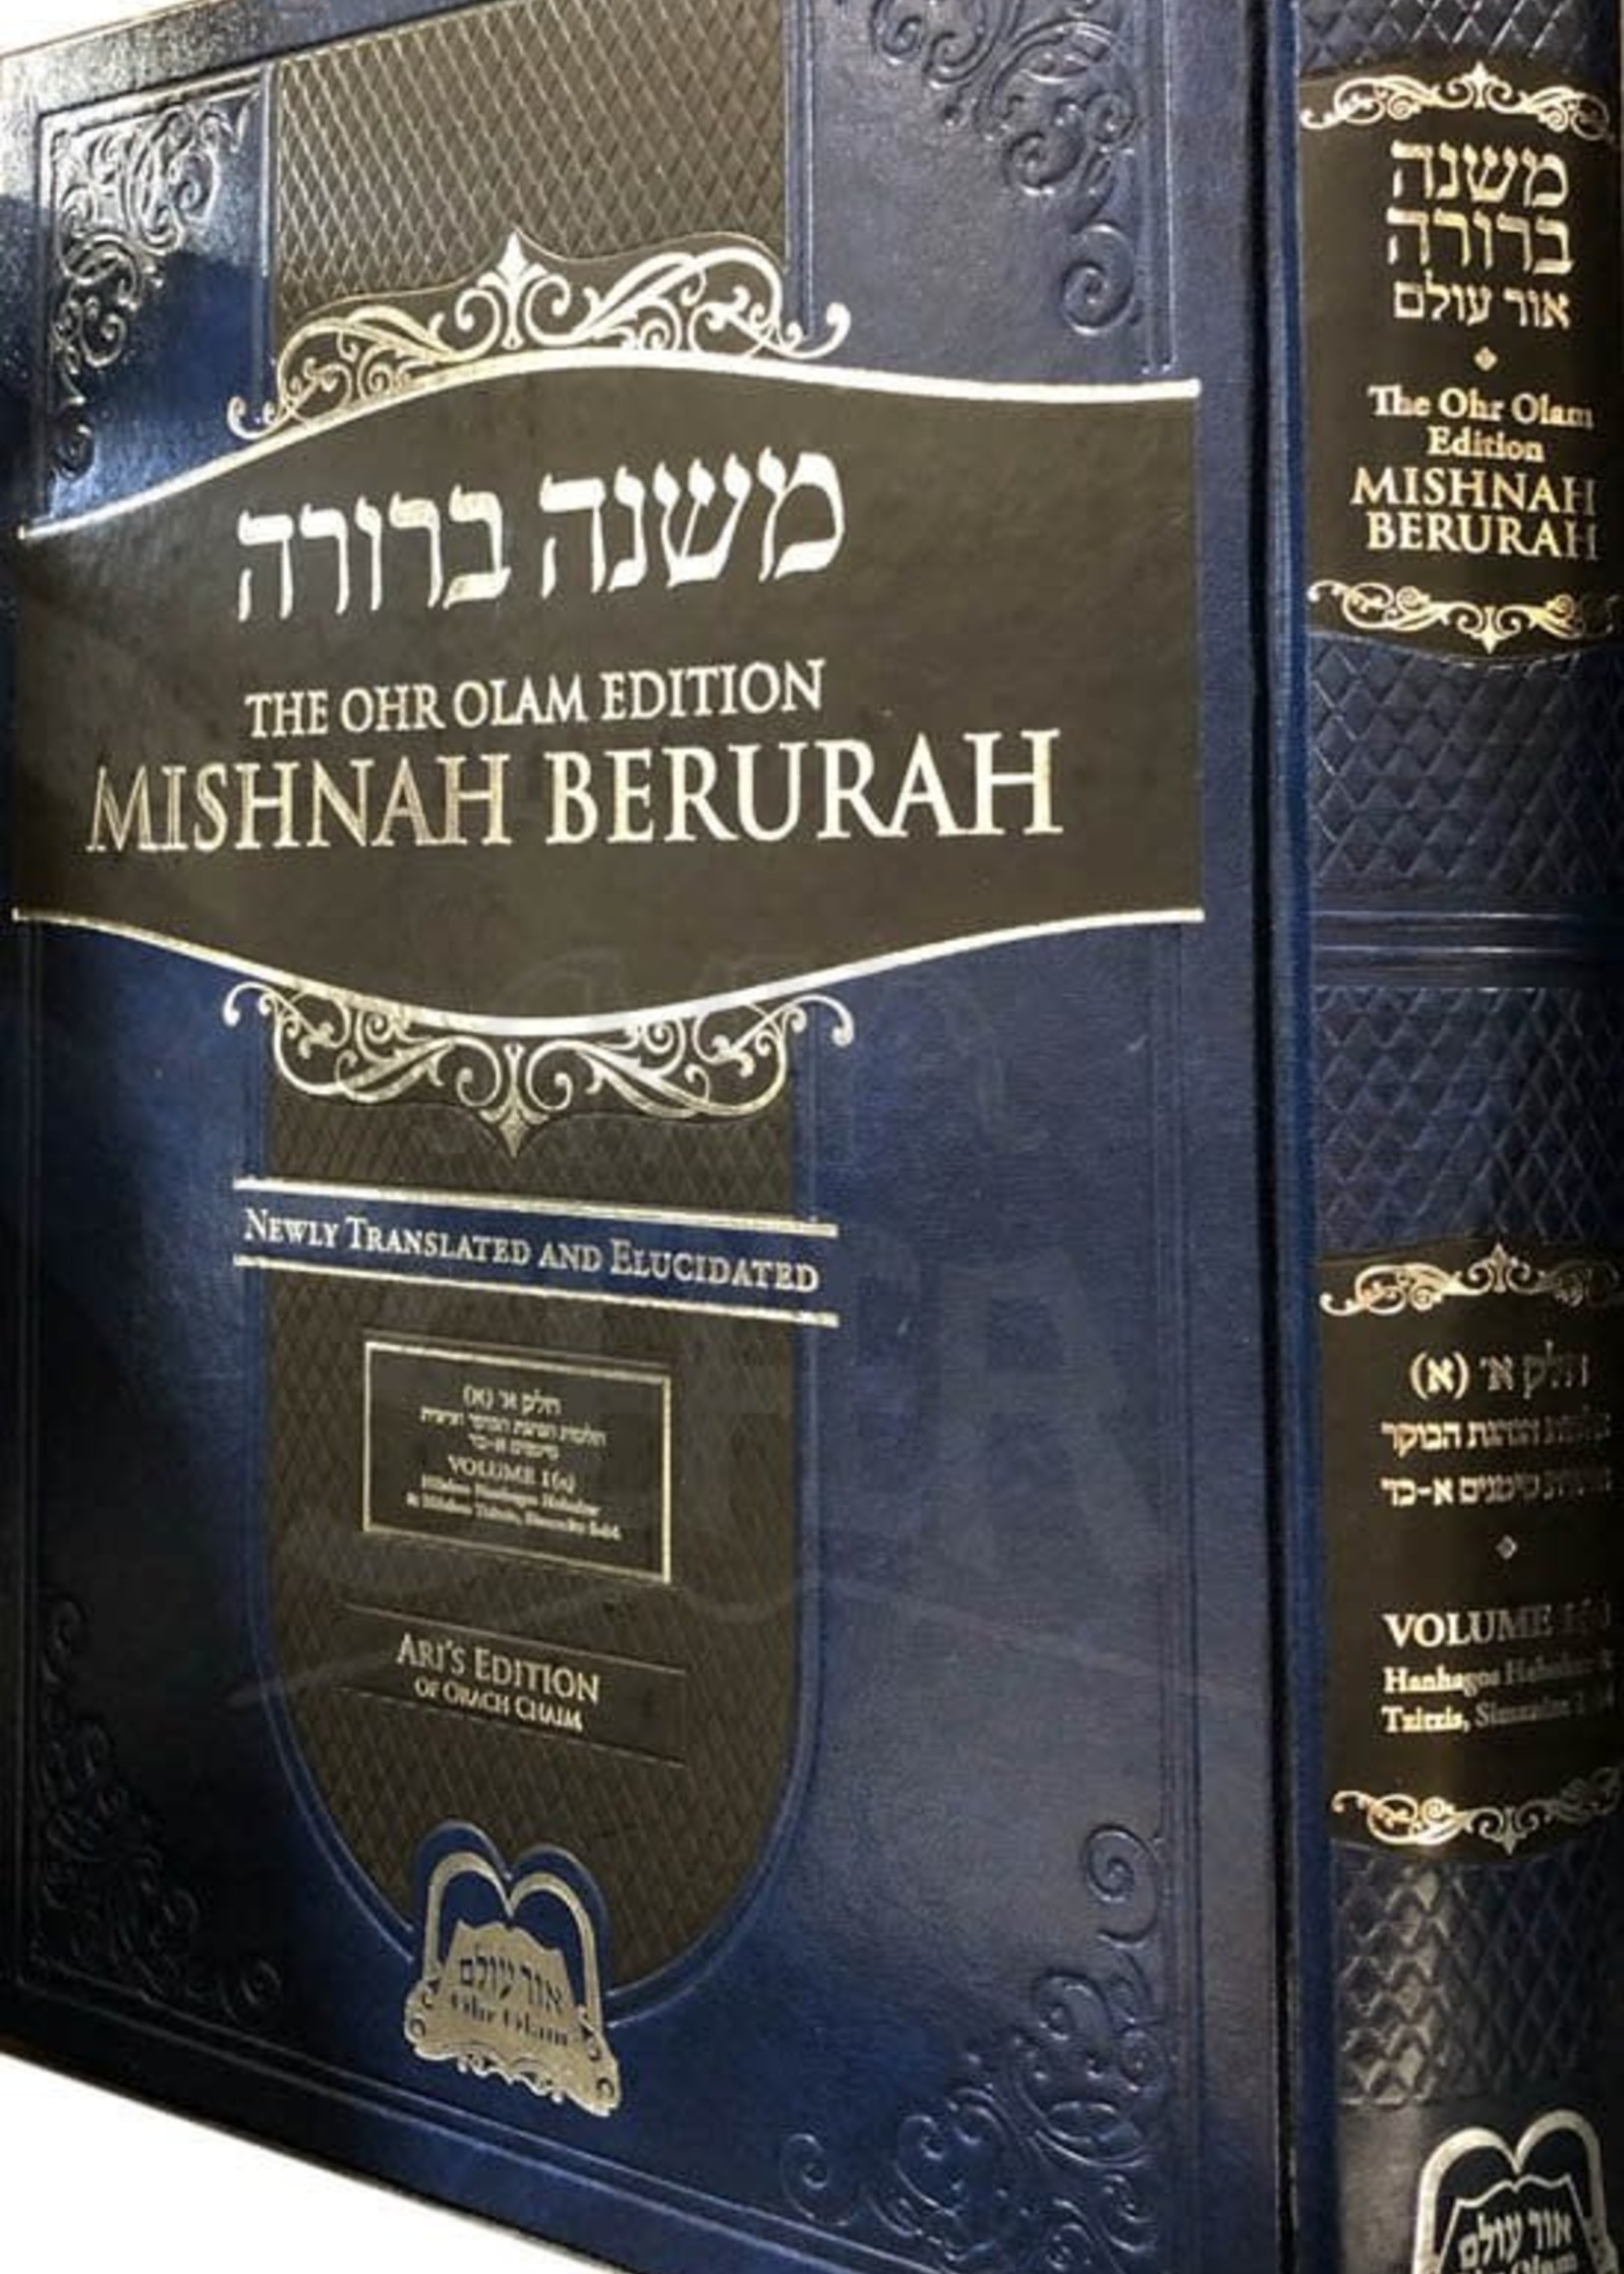 Mishnah Berurah - English/Hebrew # 1A (Ohr Olam Edition - large size)